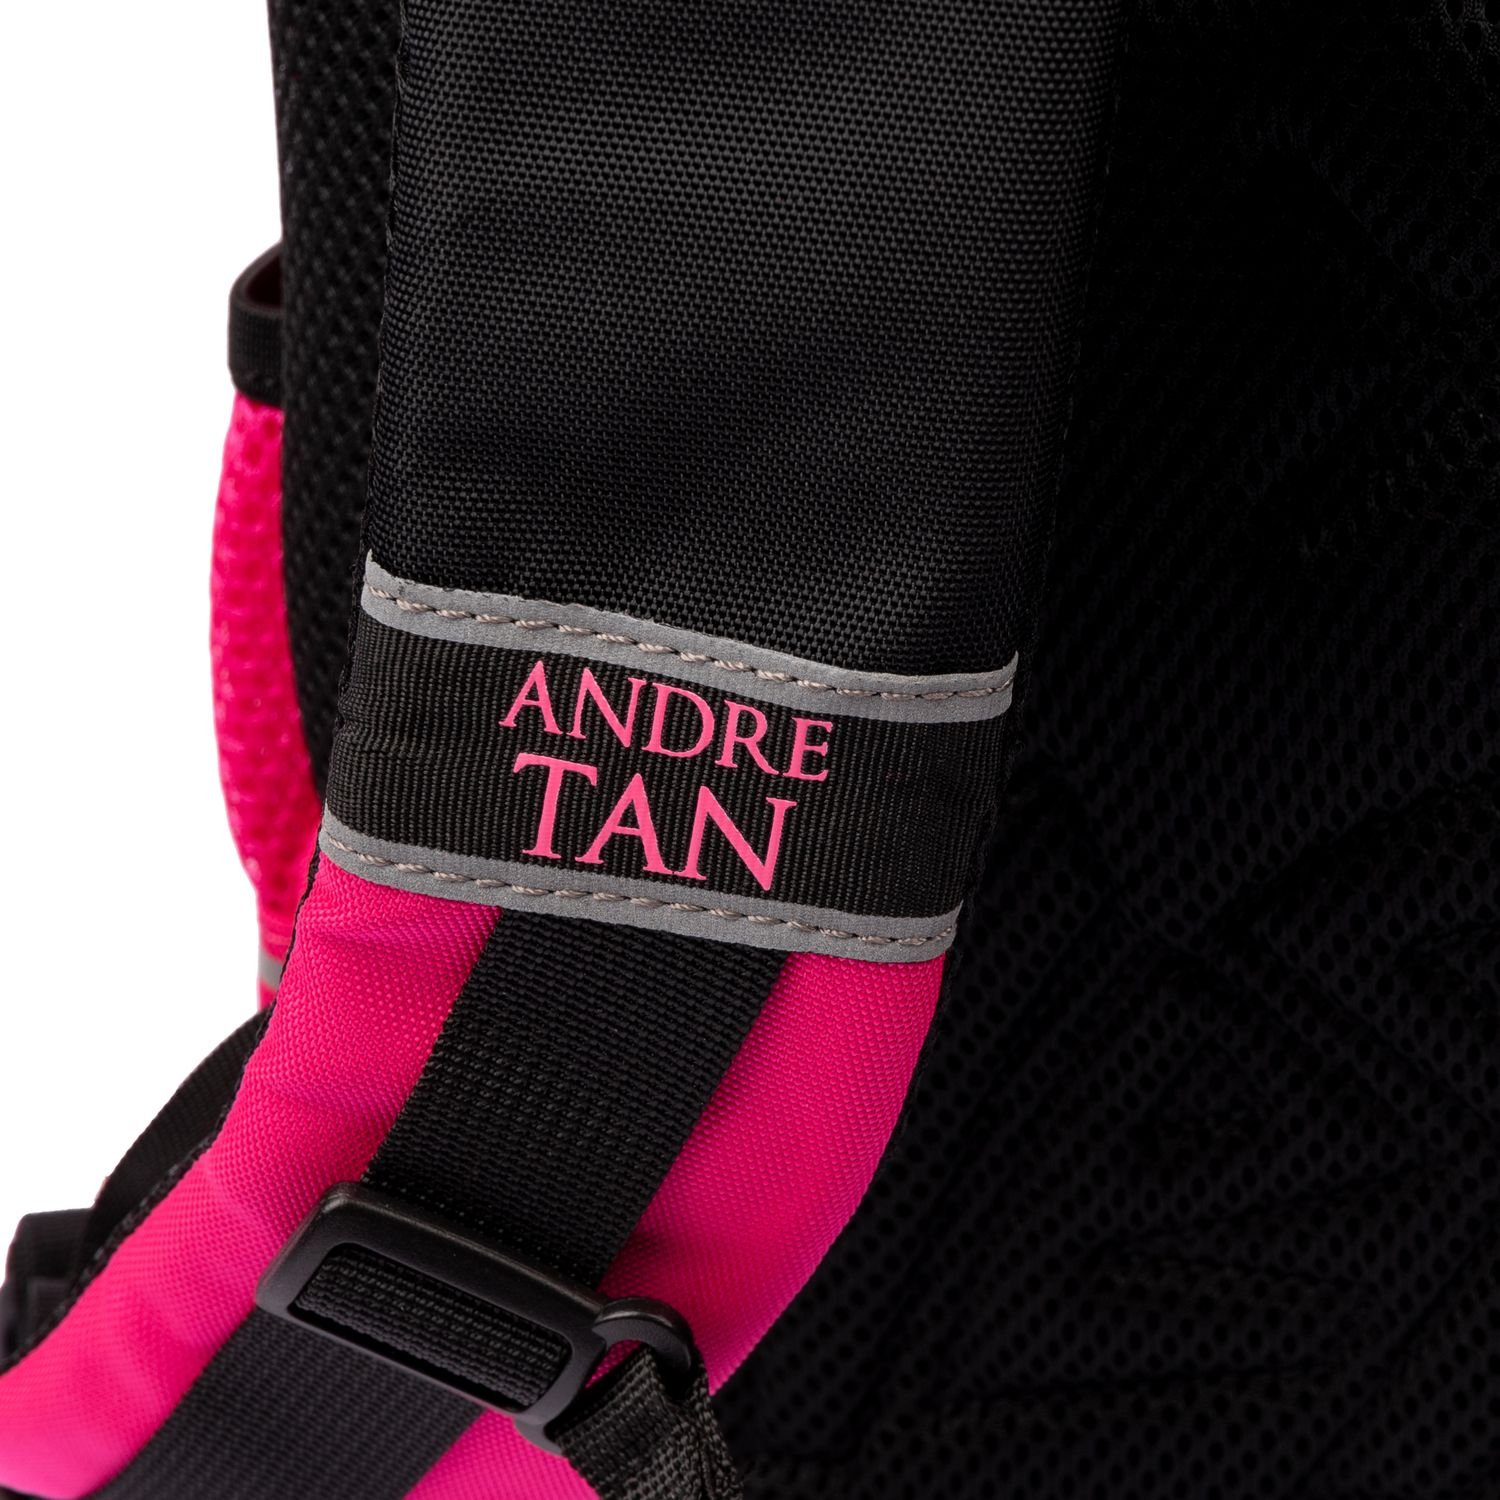 Рюкзак Yes T-129 Andre Tan Hand pink (559044) - фото 15